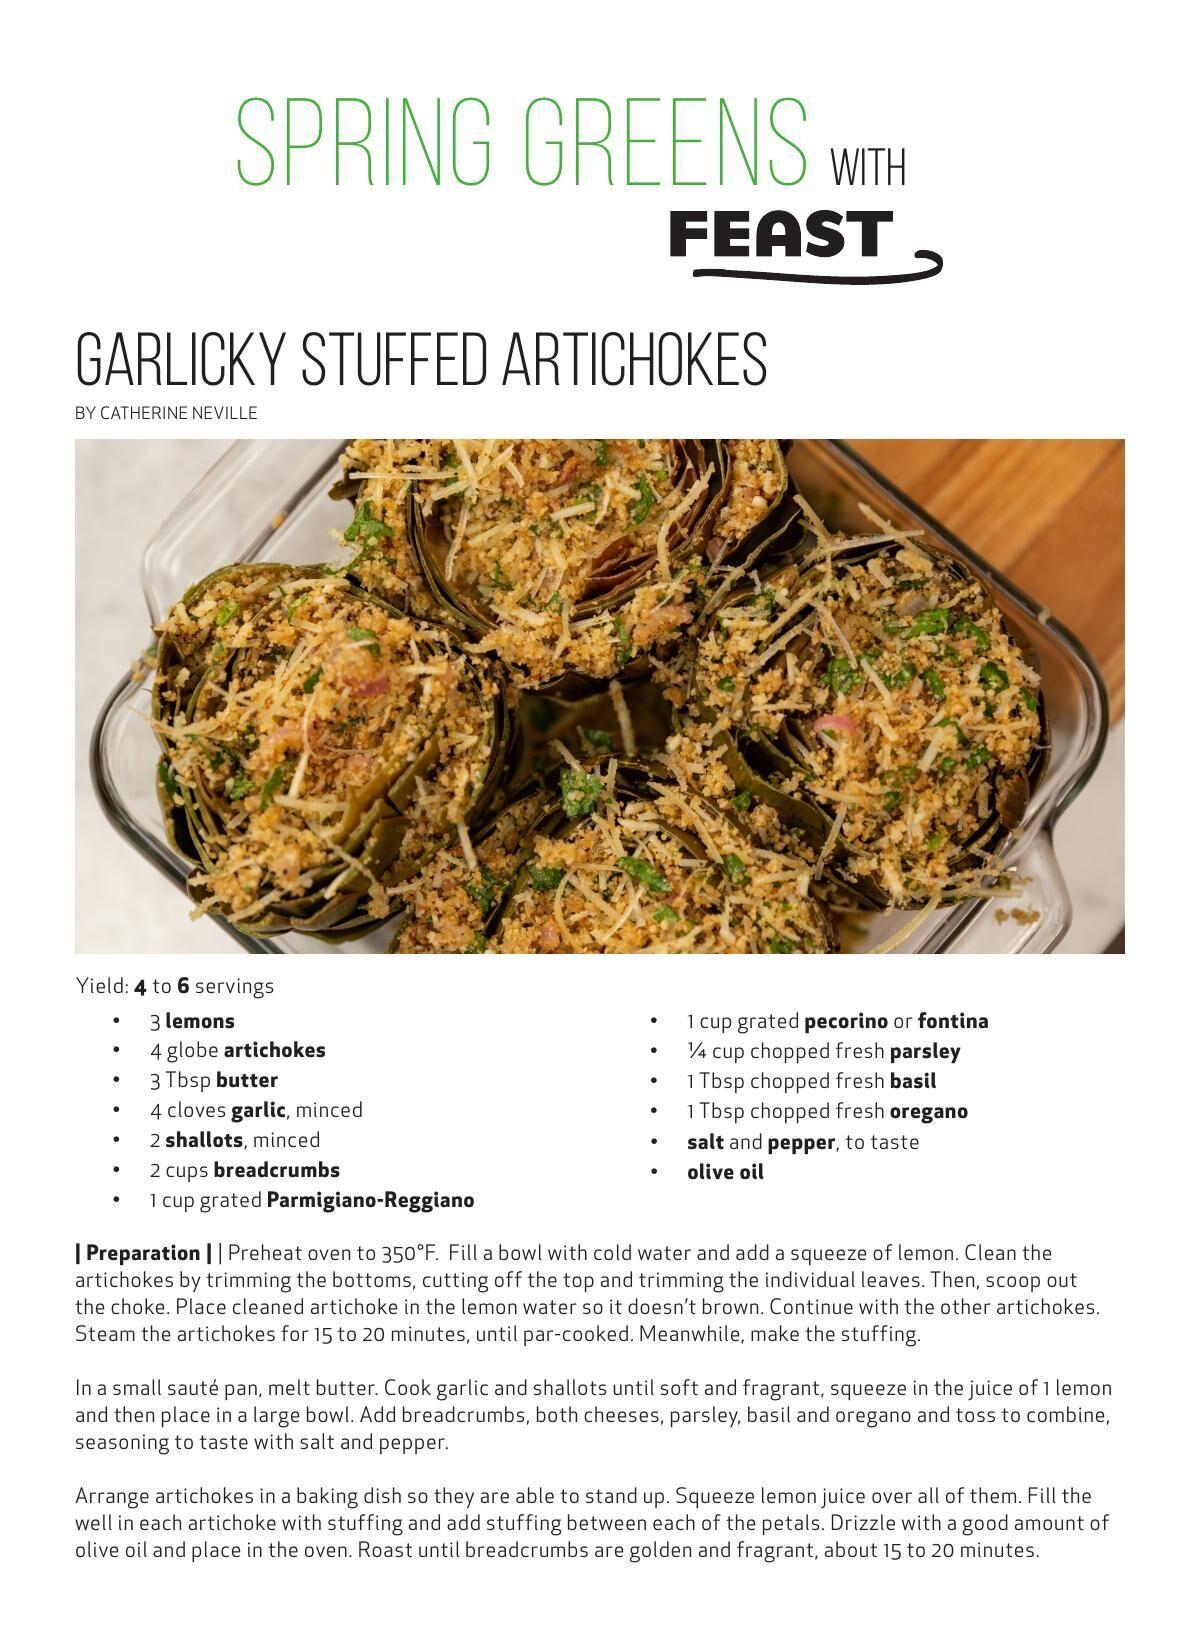 Download the Garlicky Stuffed Artichokes recipe